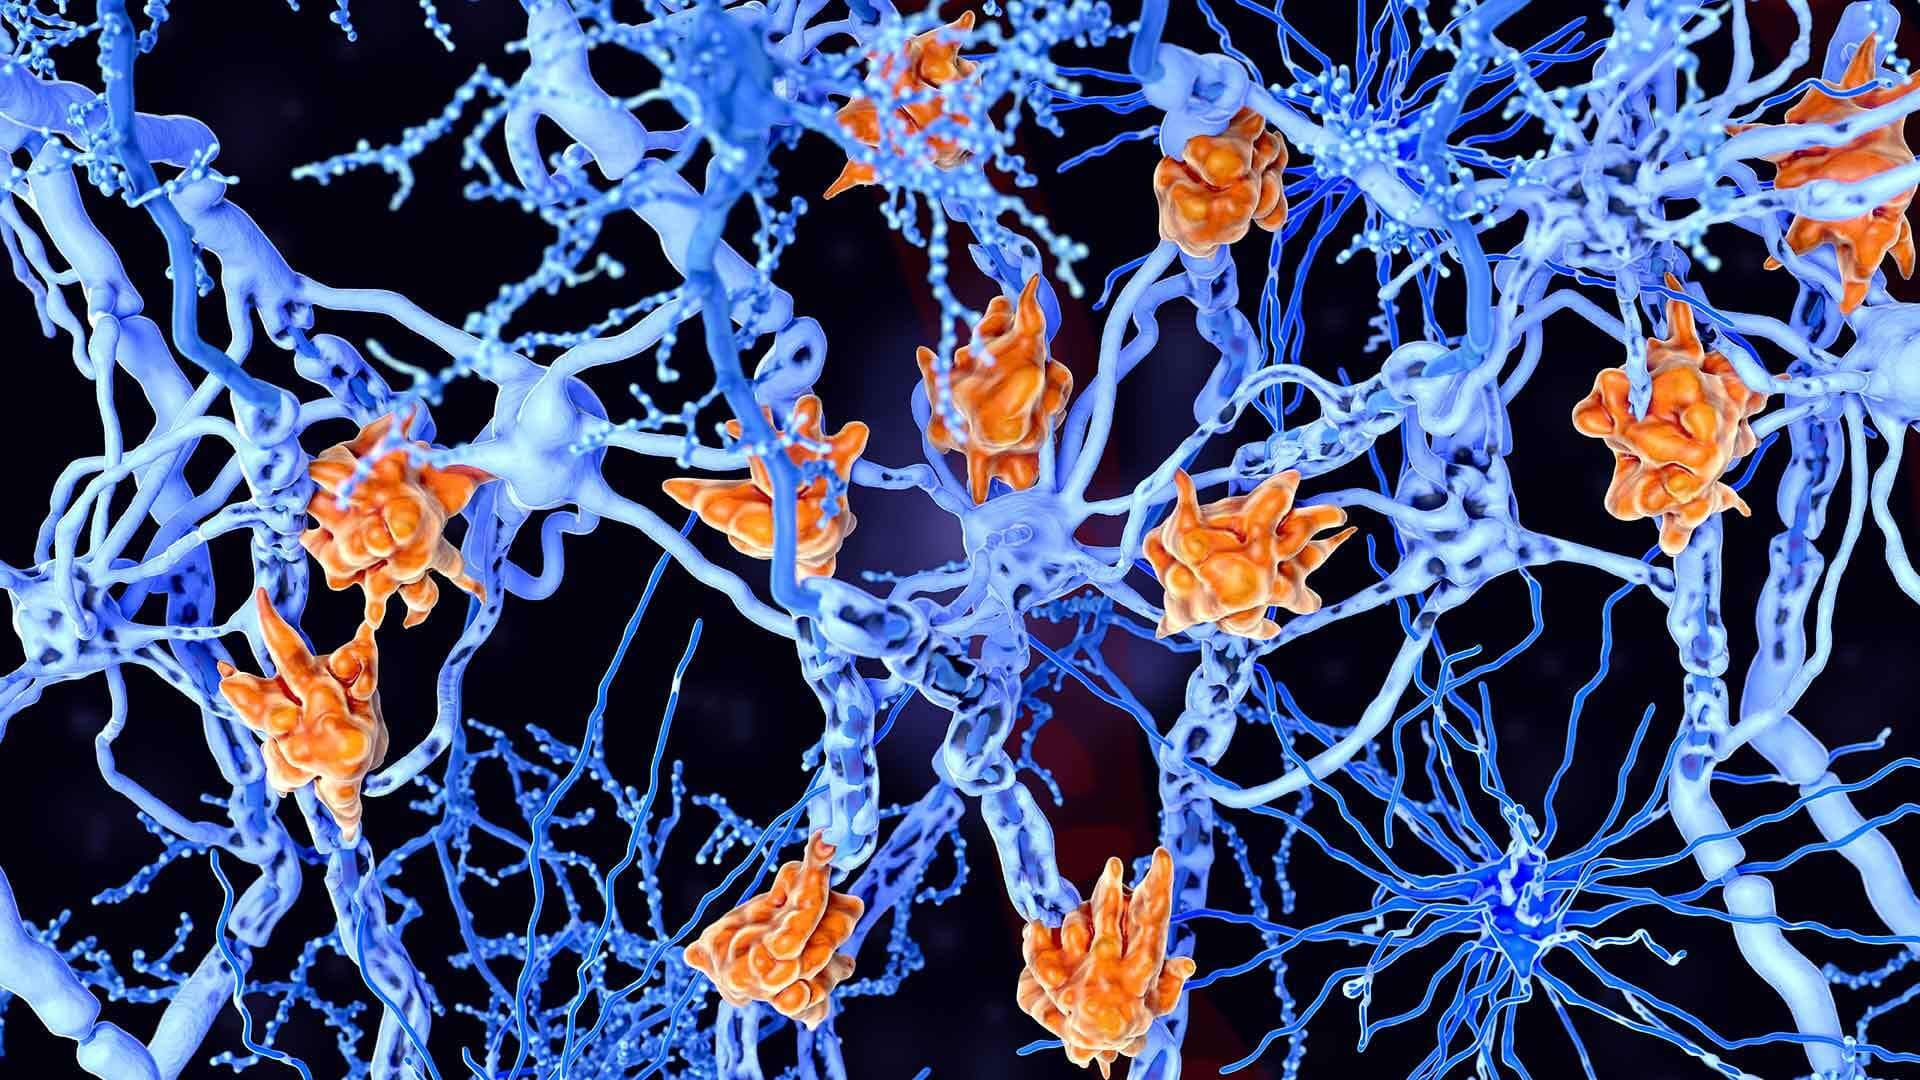 microglia cells (orange) damage the myelin sheath of neuron axons